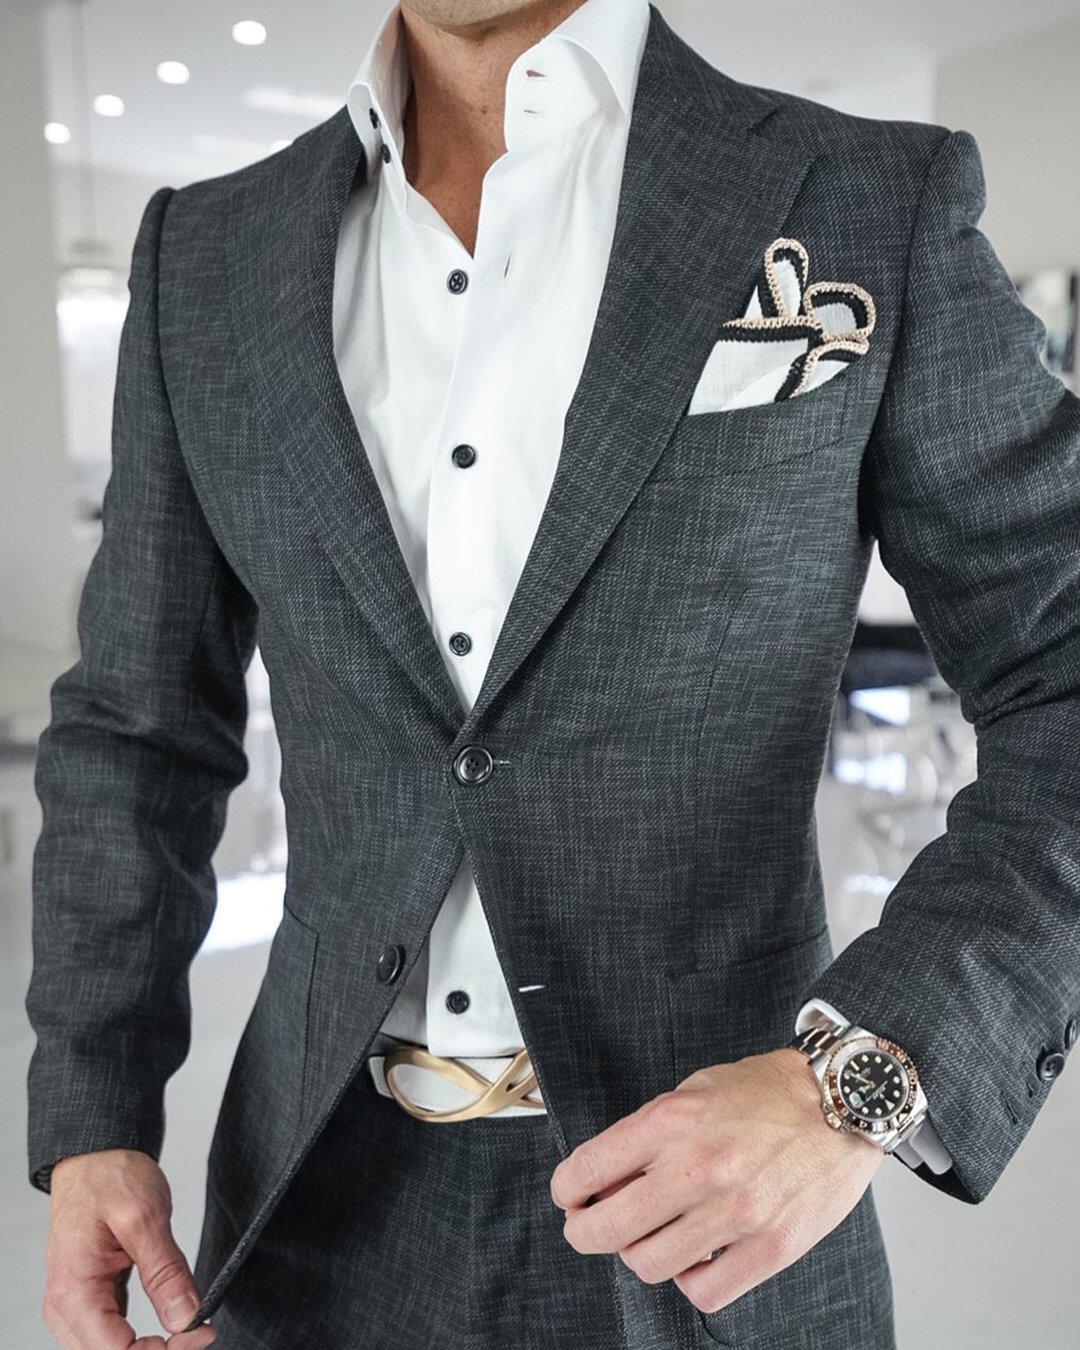 groom suits grey jacket with boutoniere sebastiancruzcouture